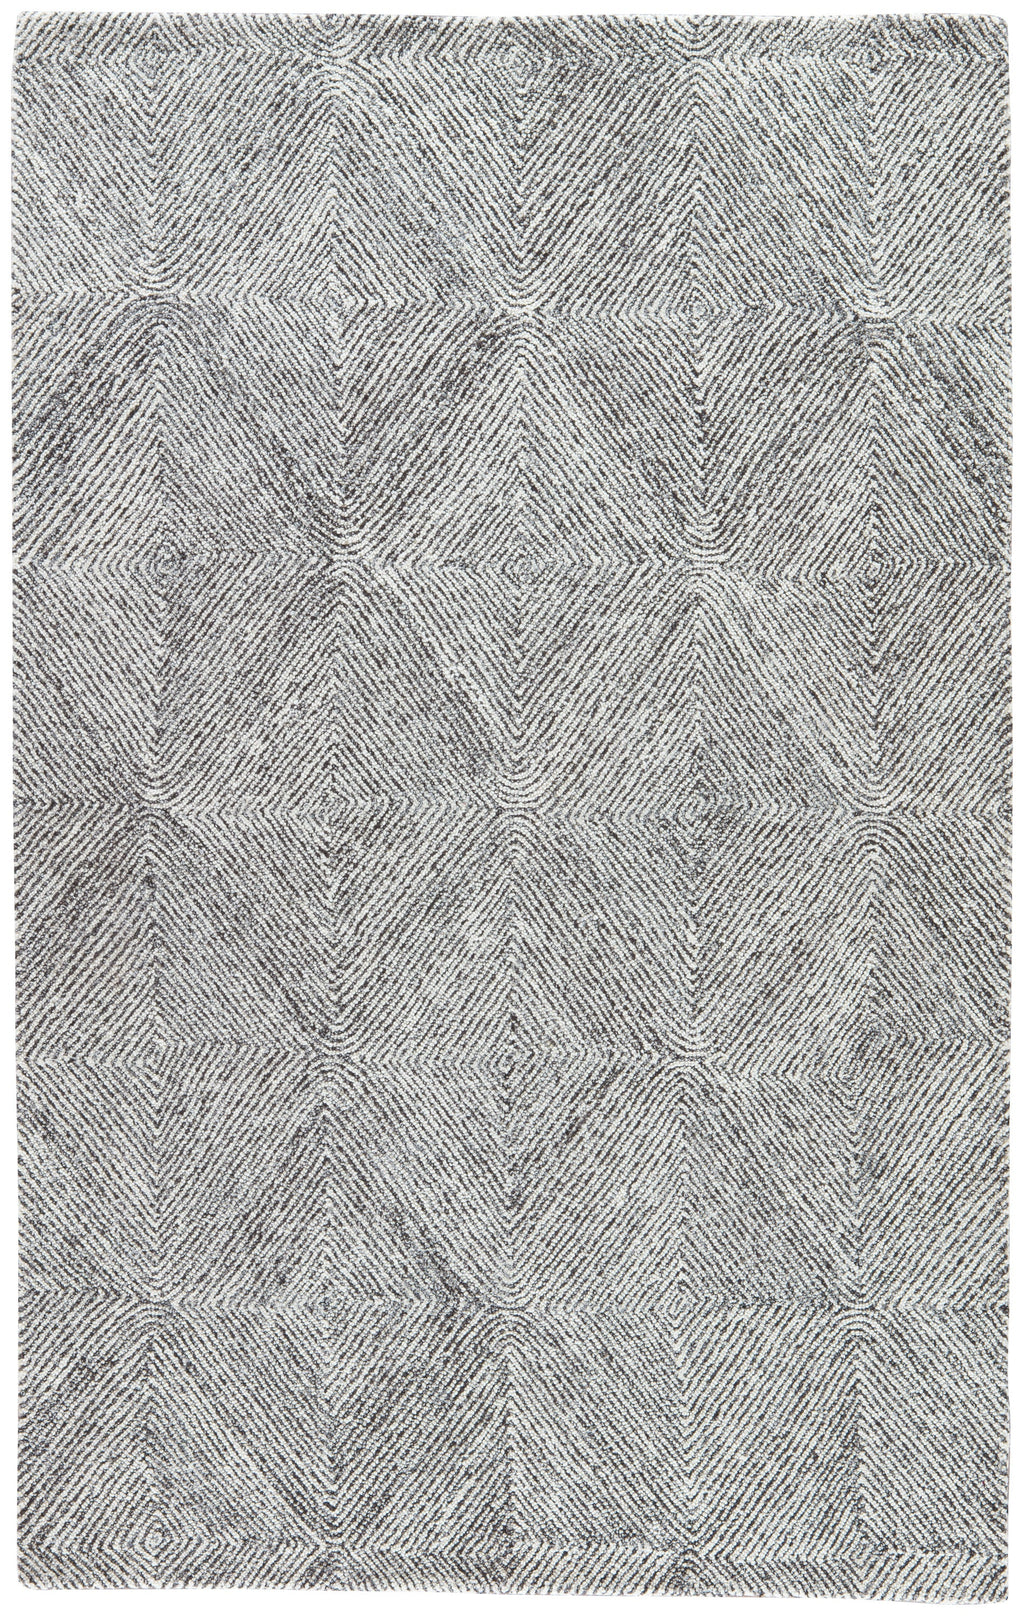 exhibition geometric rug in whisper white beluga design by jaipur 1